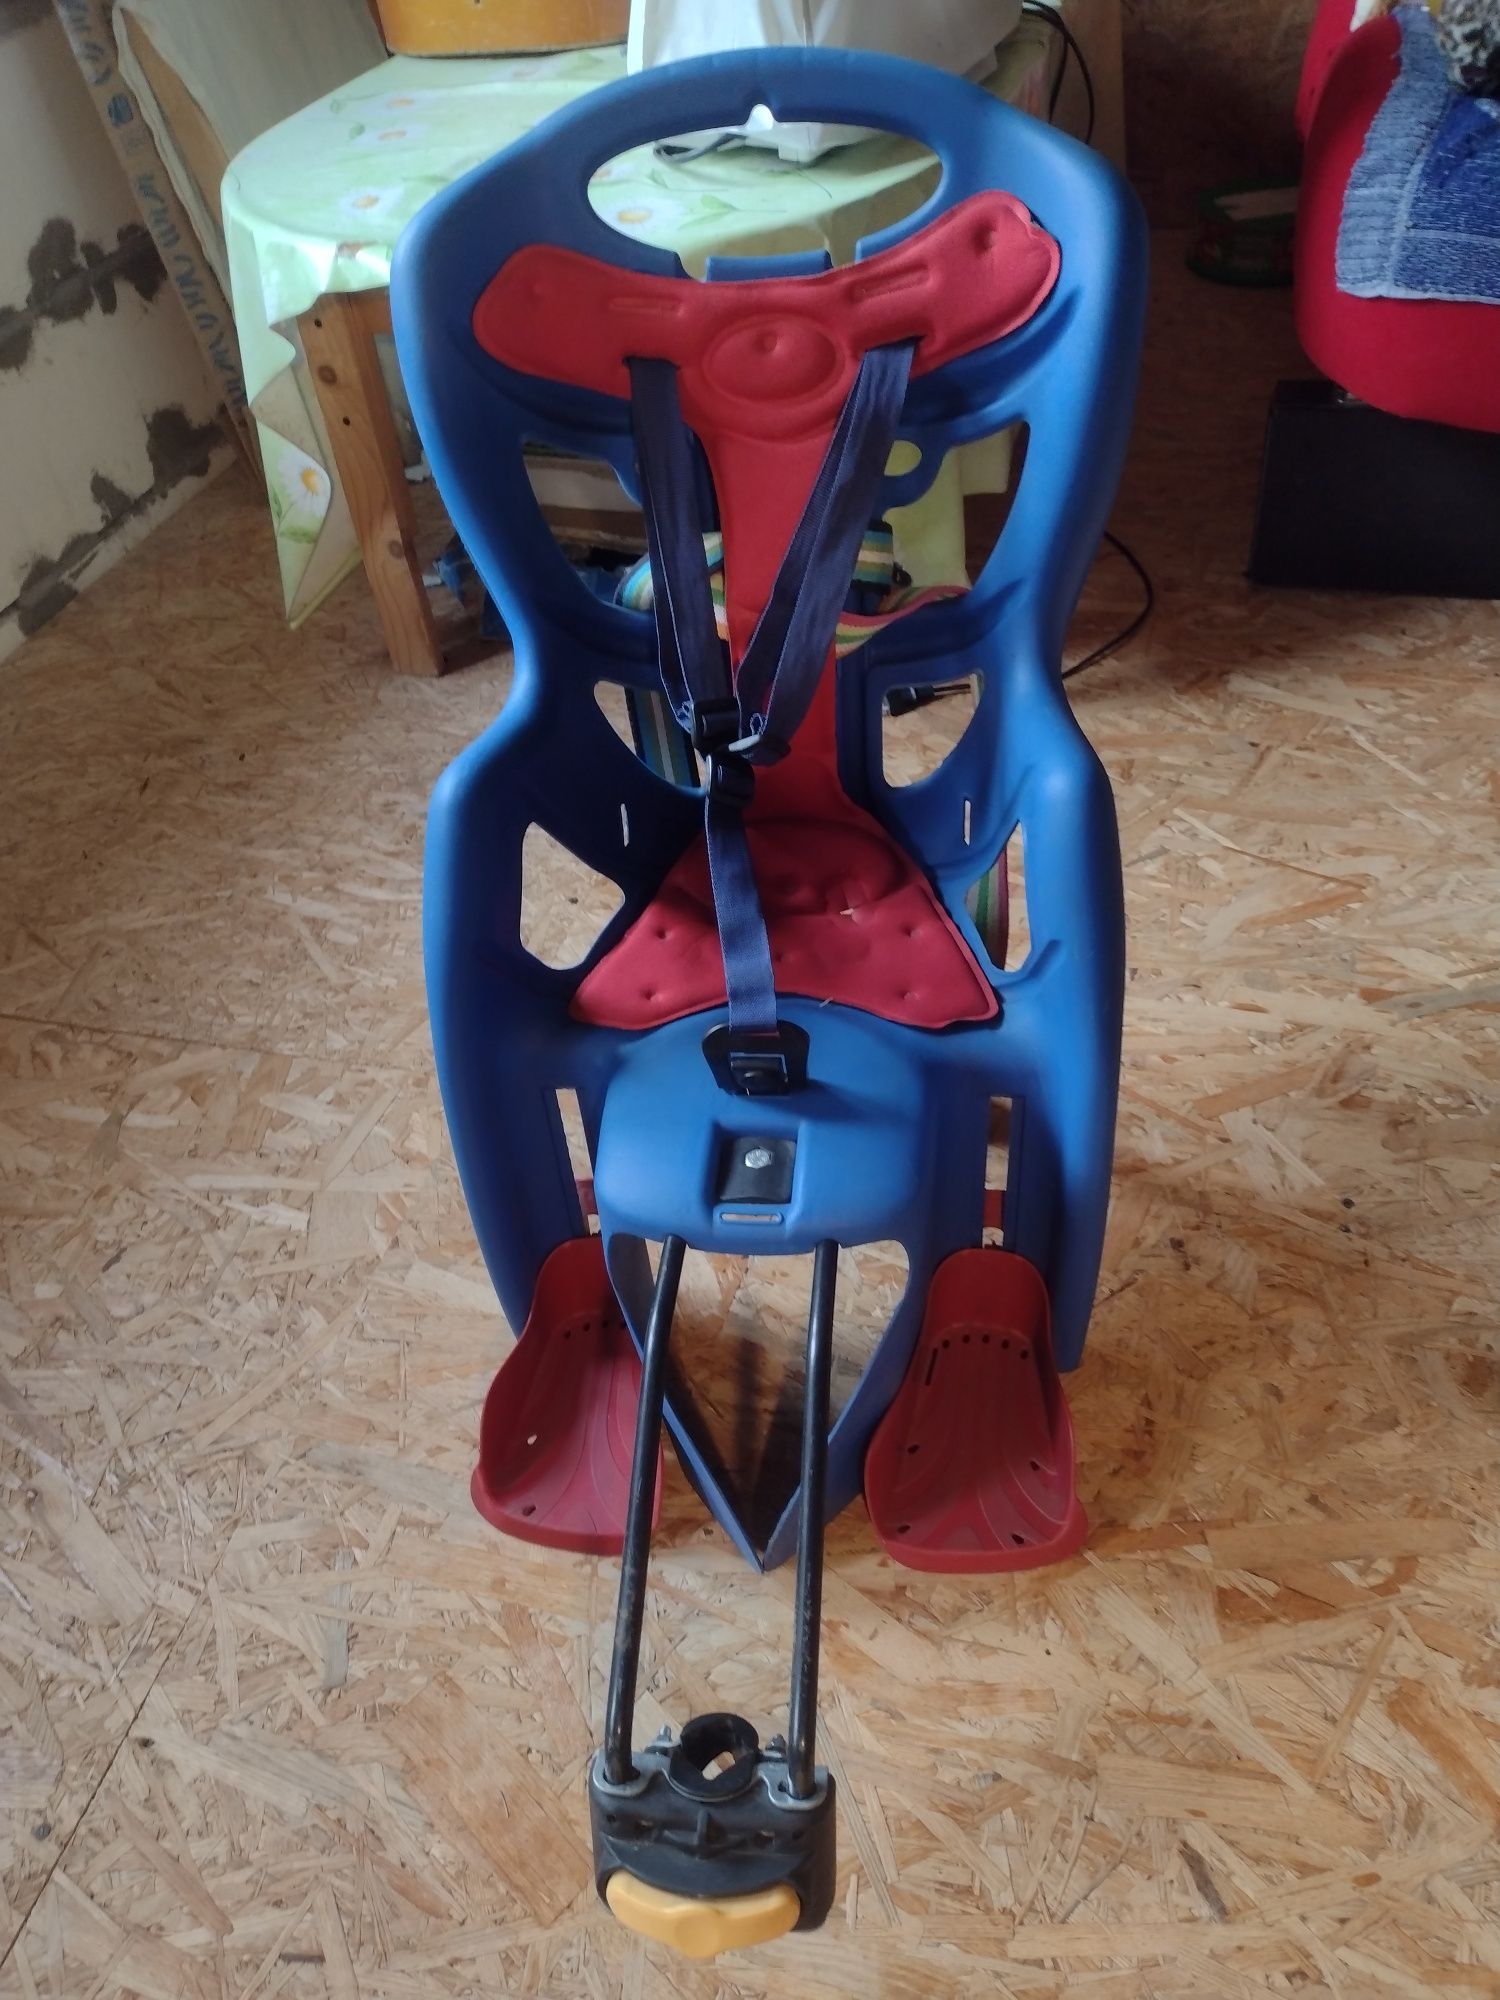 Fotelik rowerowy bellelli dla dziecka